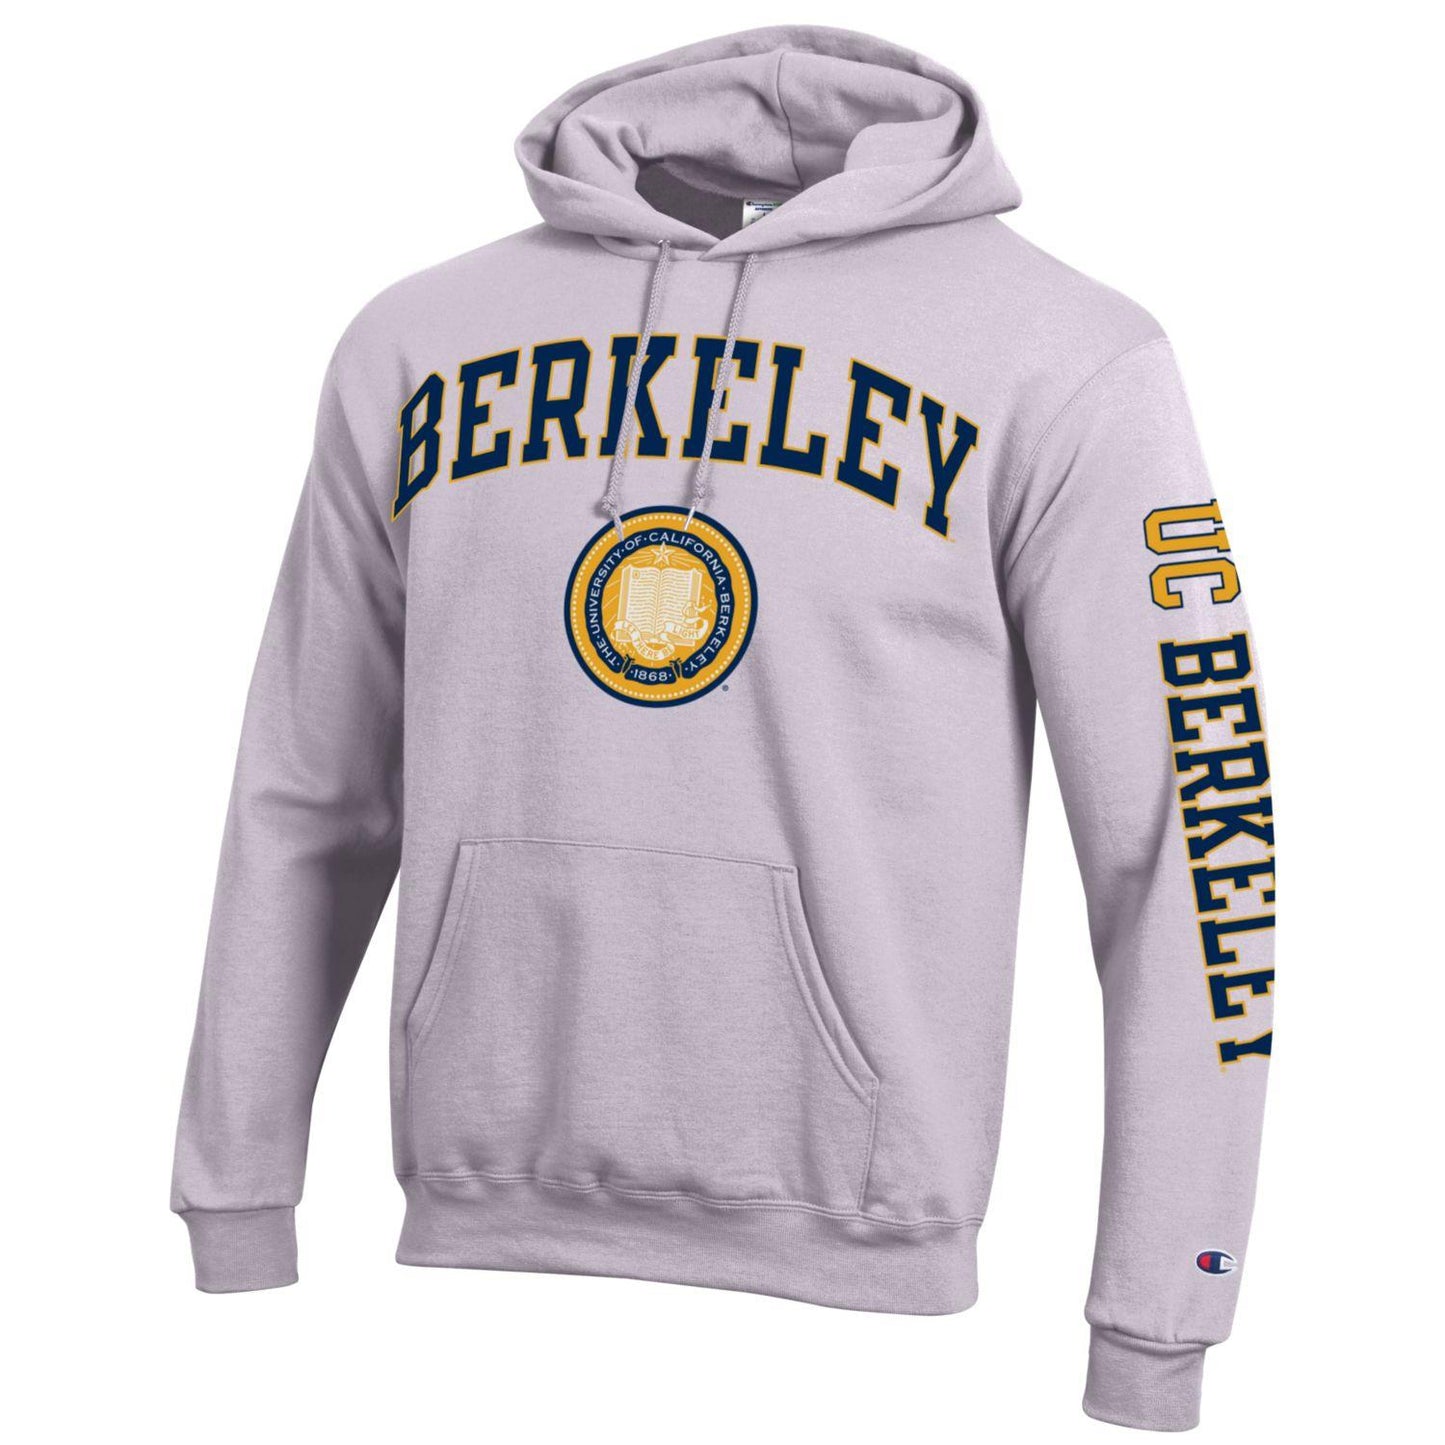 U.C. Berkeley arch & seal hoodie sweatshirt-Lilac-Shop College Wear